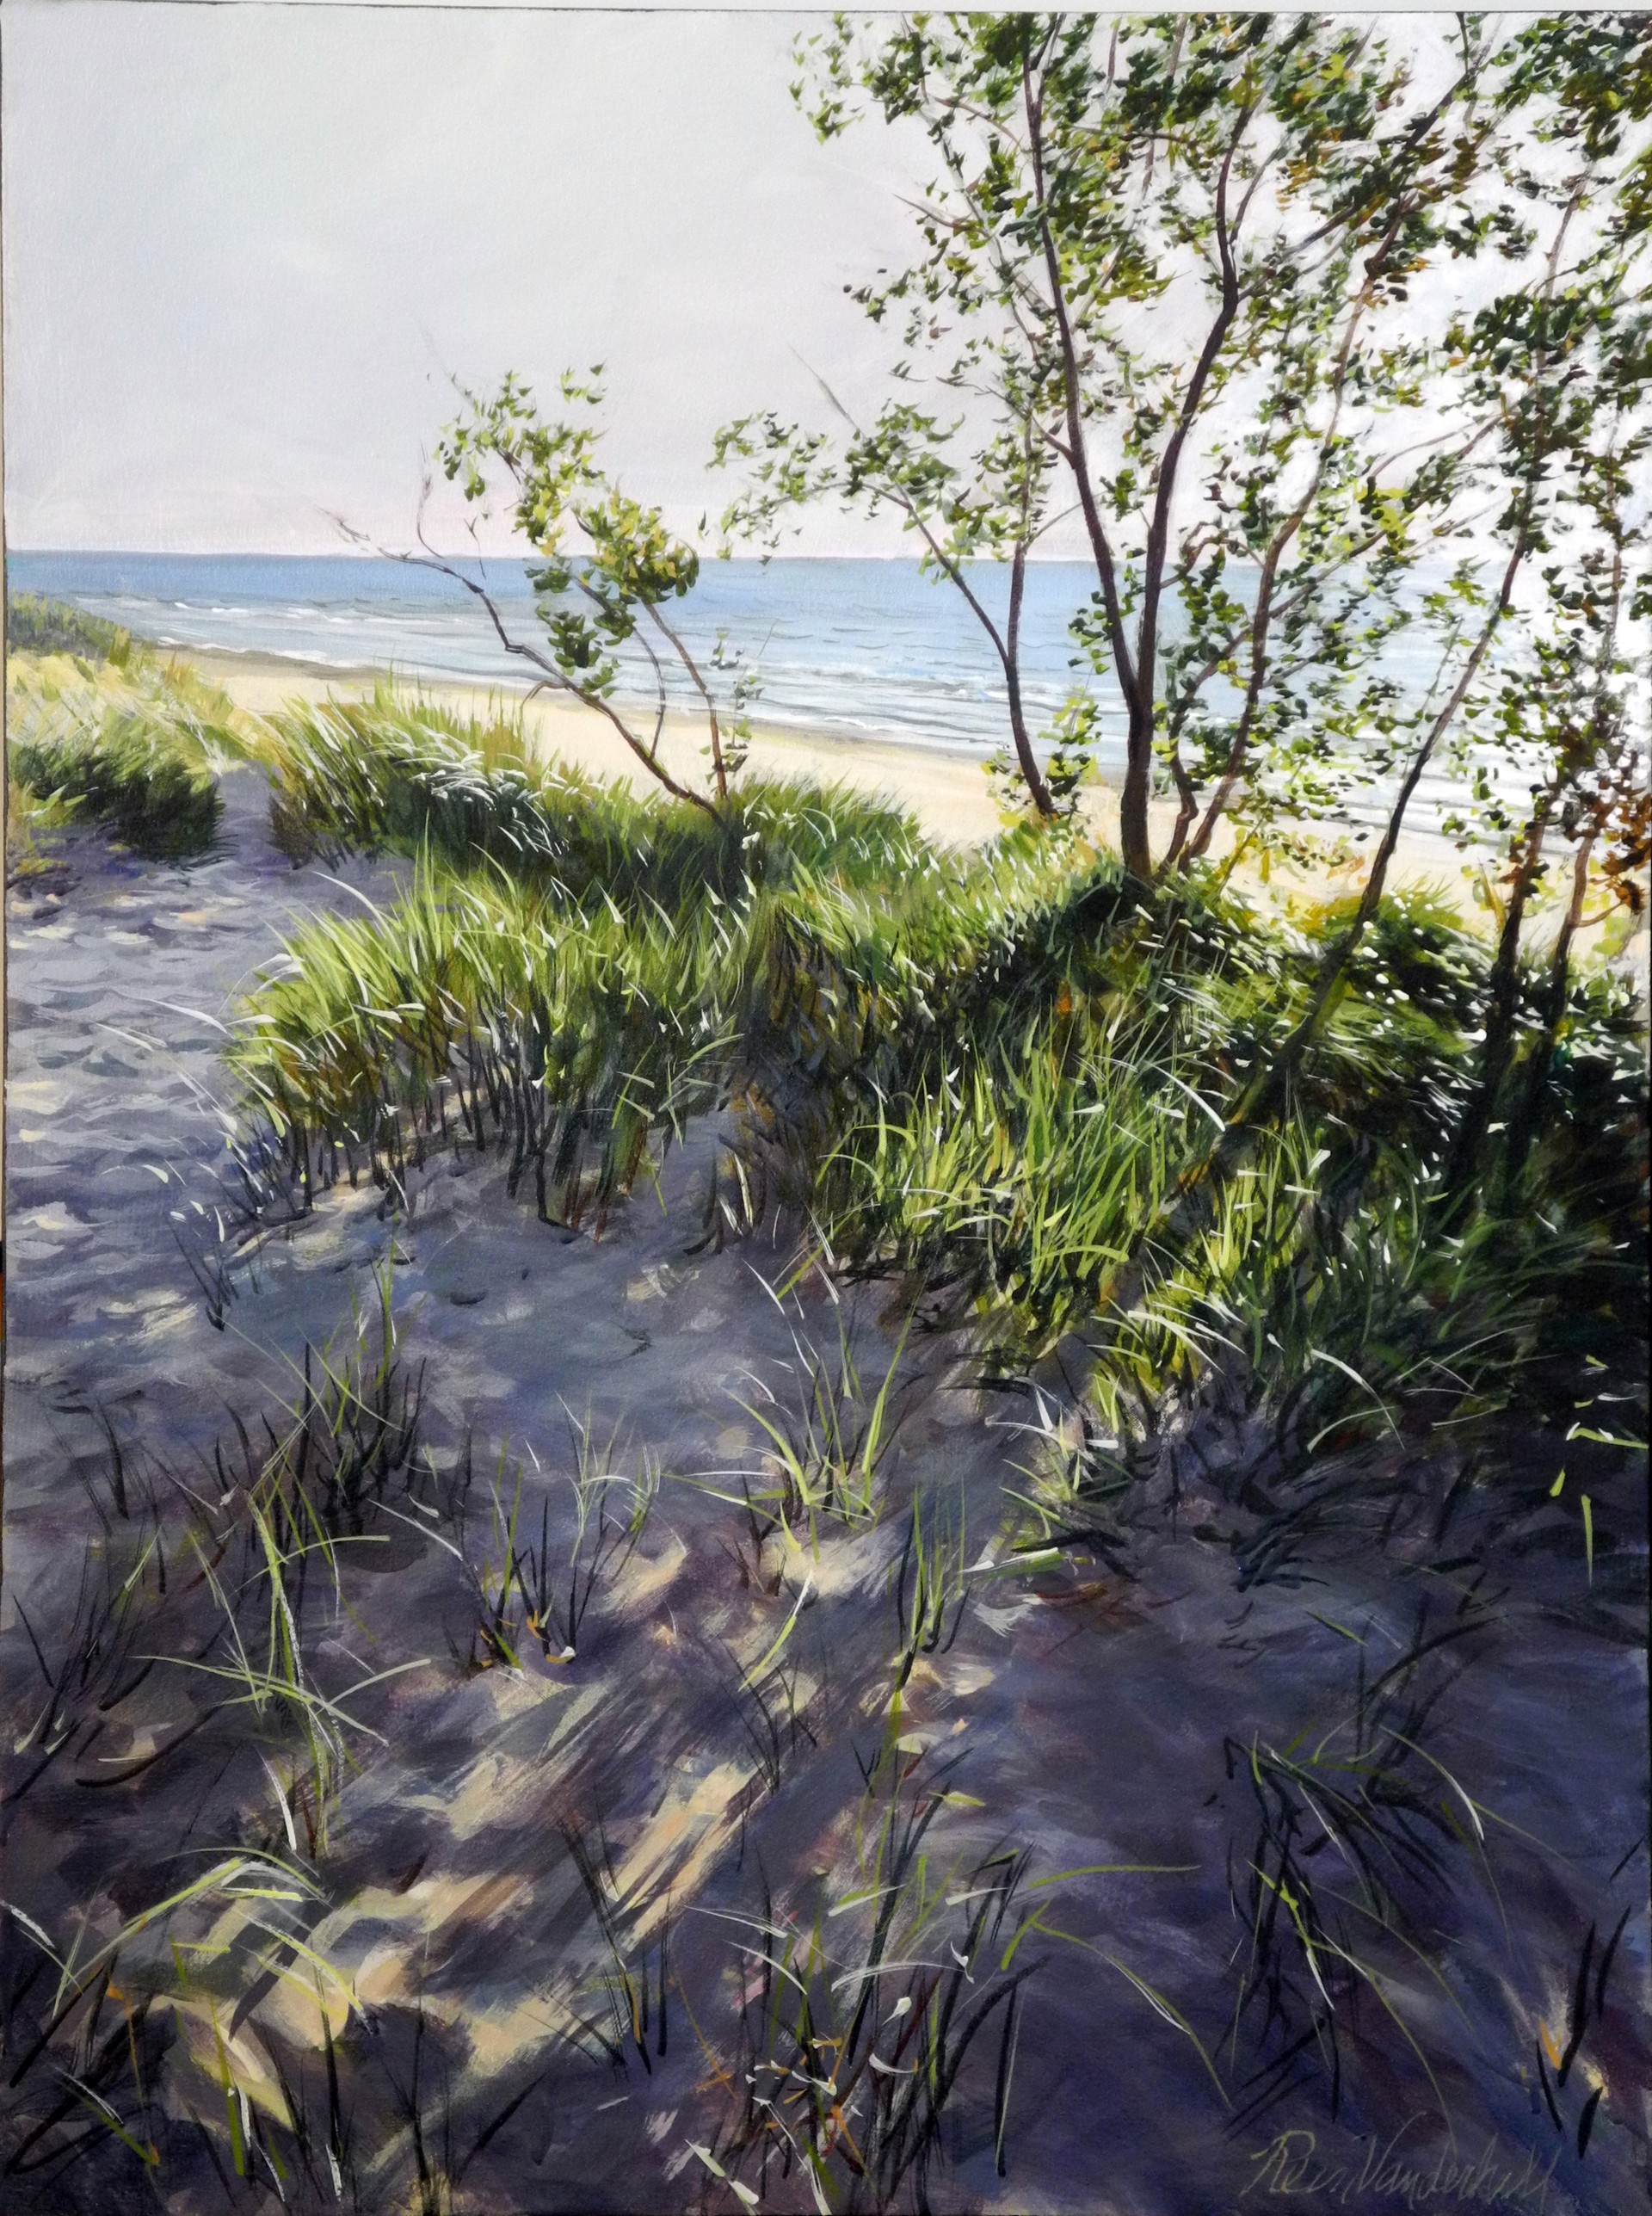 In Fore dune Shadow by Rein Vanderhill